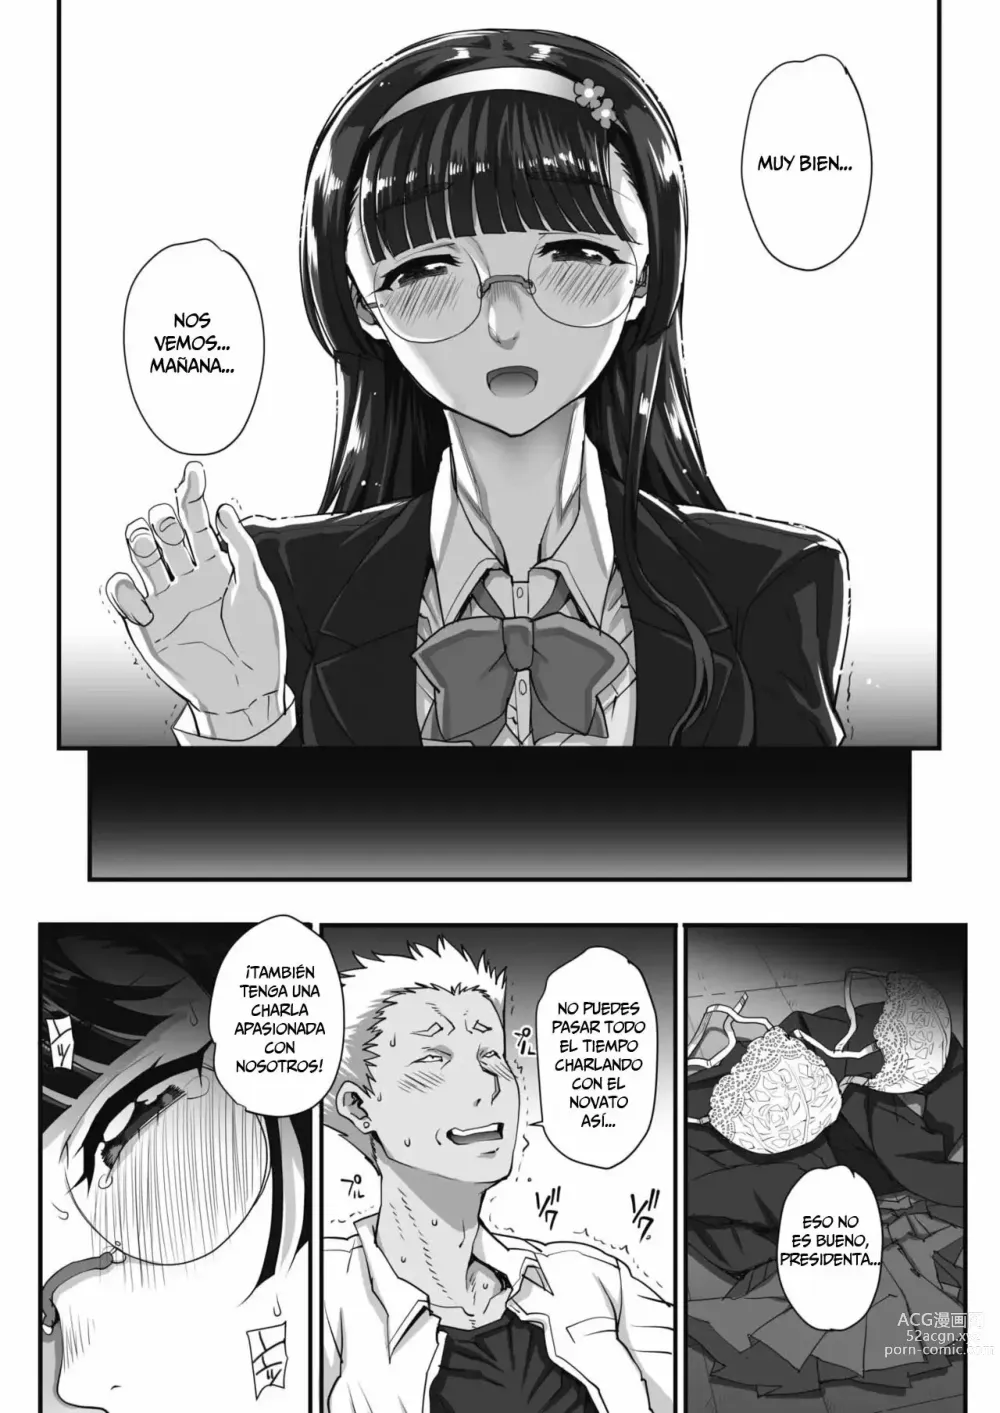 Page 6 of manga Bungaku o musaboru monotachi Ch. 0-4